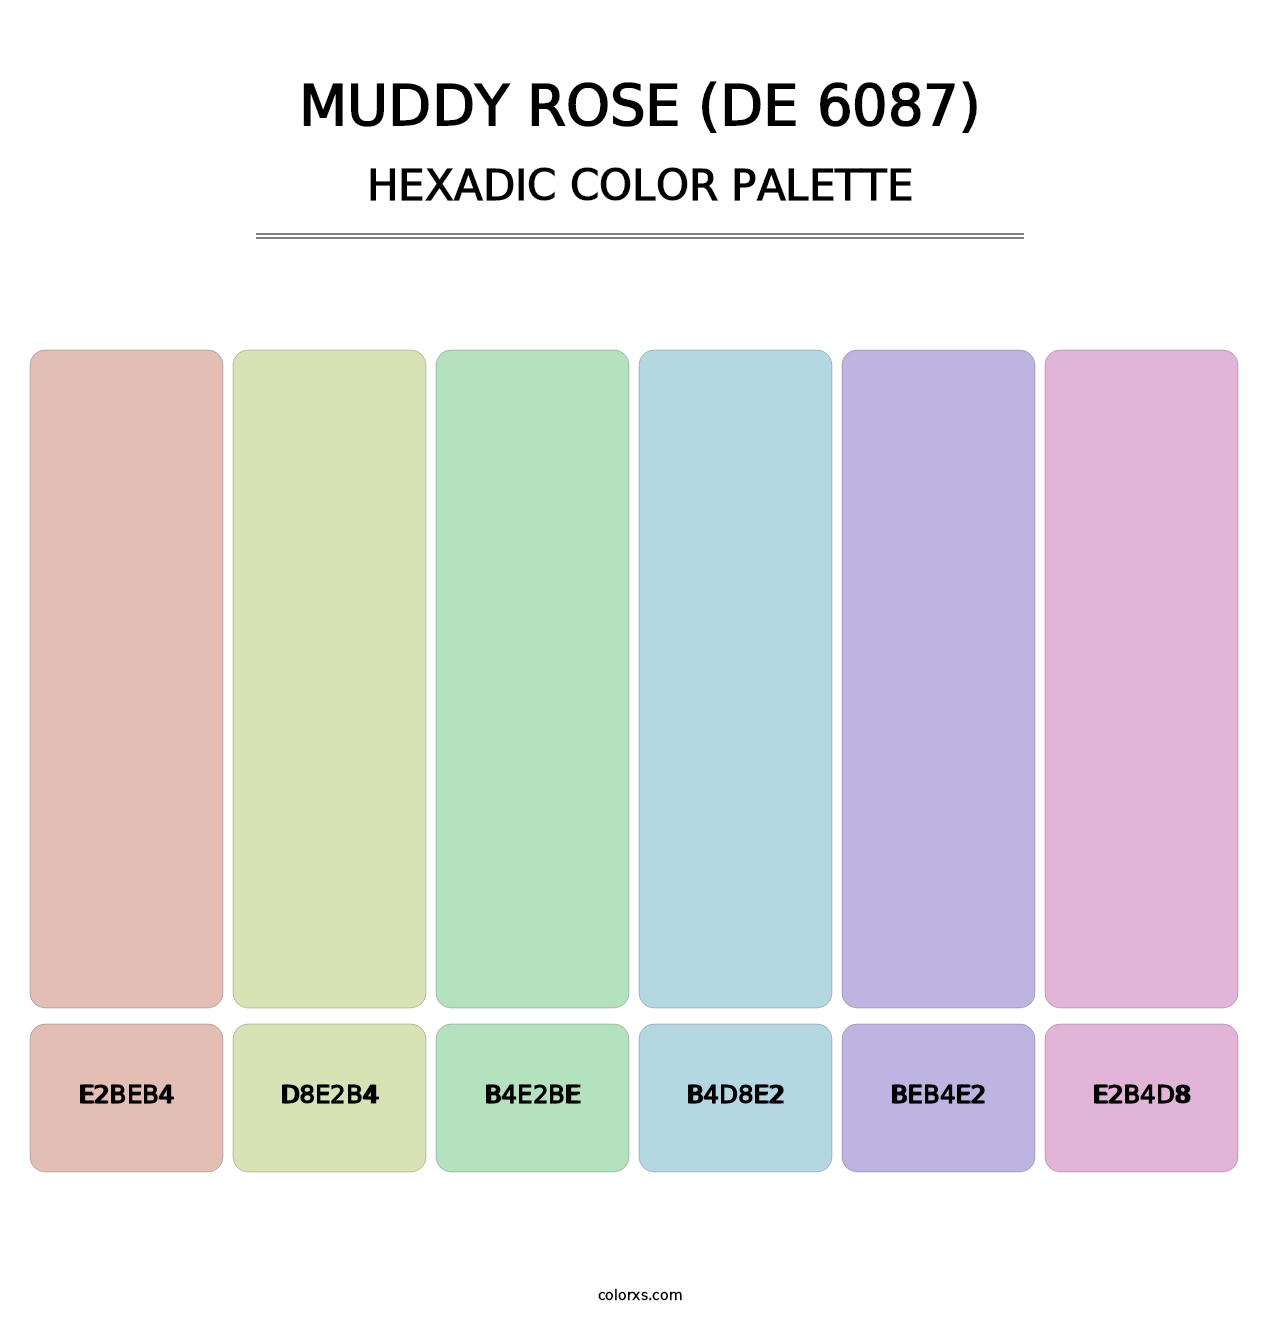 Muddy Rose (DE 6087) - Hexadic Color Palette